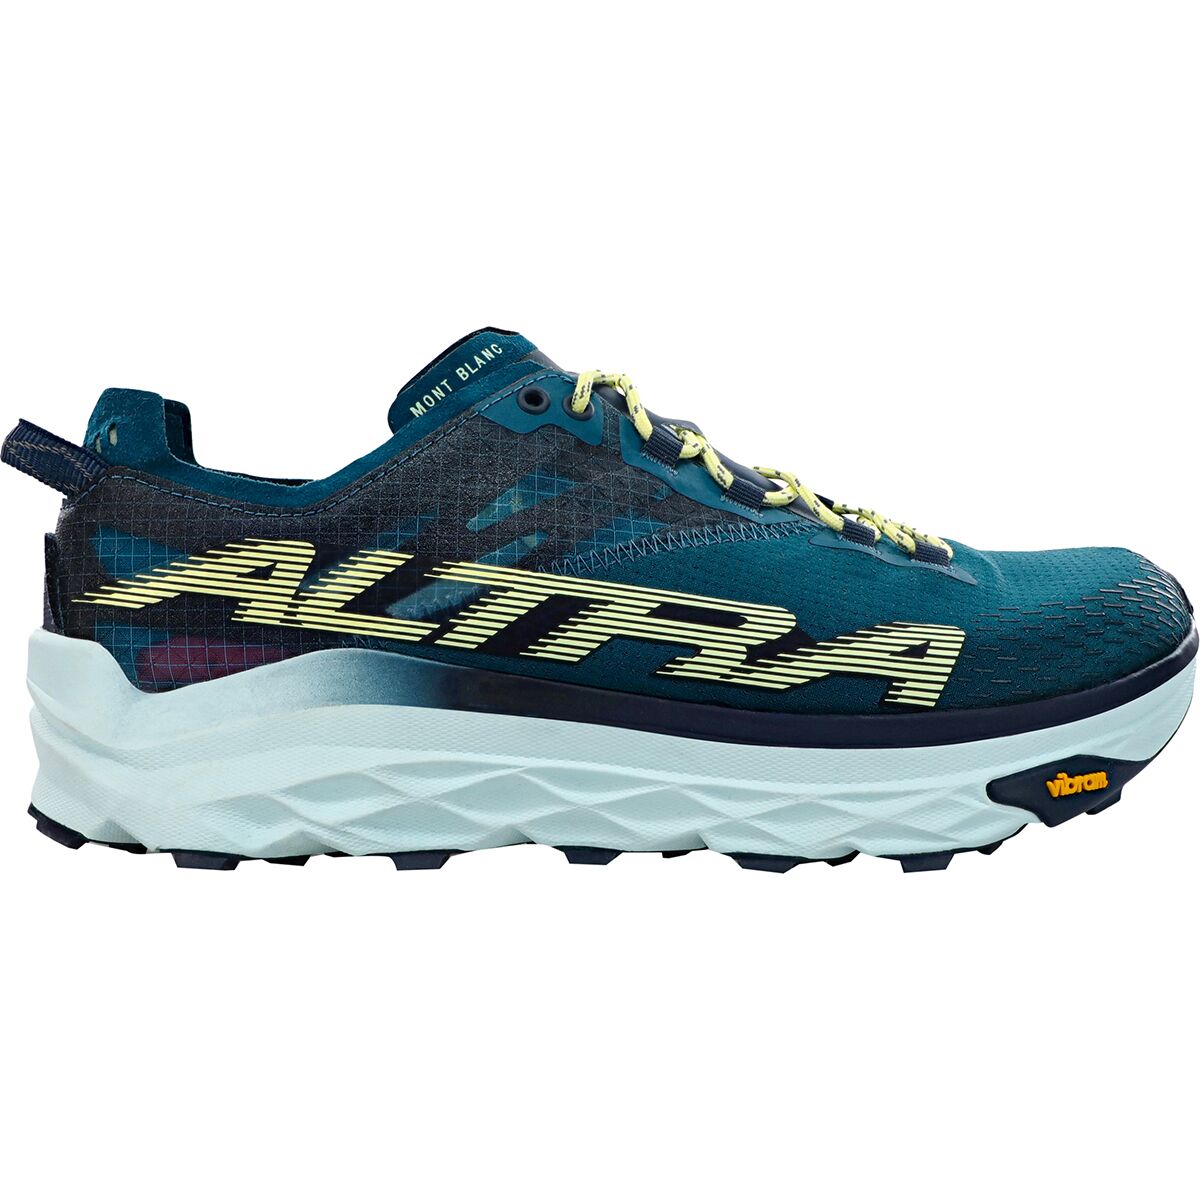 Altra Mont Blanc Trail Running Shoe - Women's